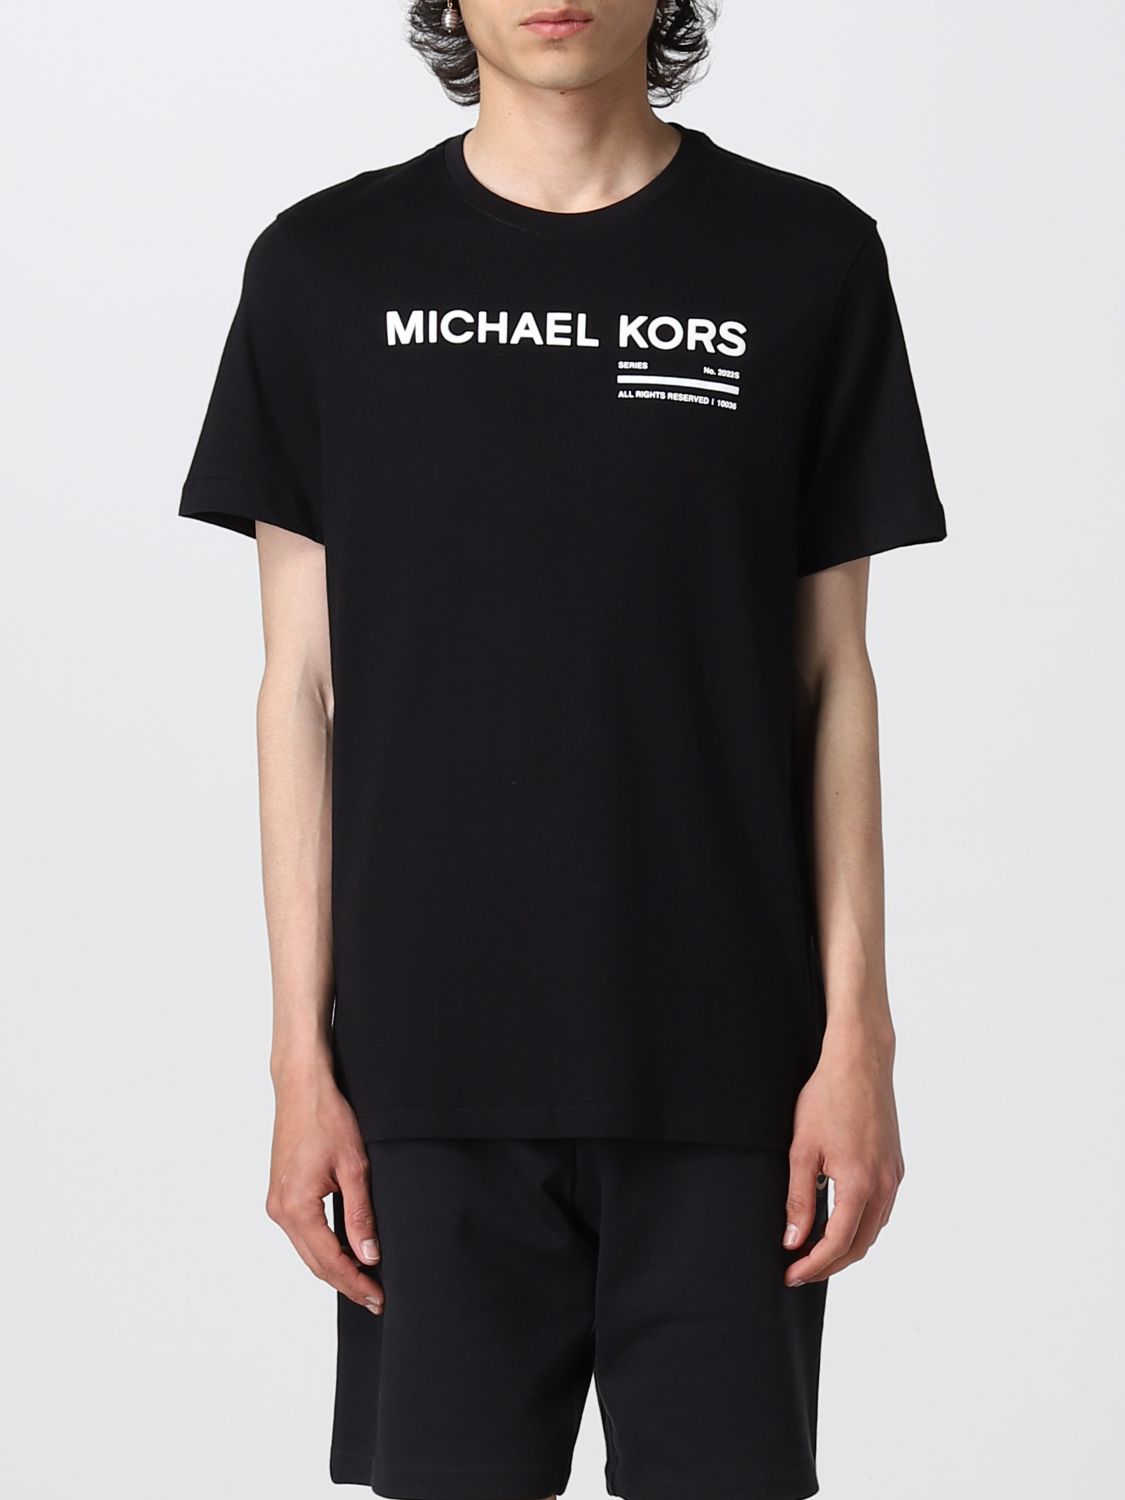 MICHAEL MICHAEL KORS: t-shirt for man - Black | Michael Michael Kors t-shirt  CS250VEF4 online on 